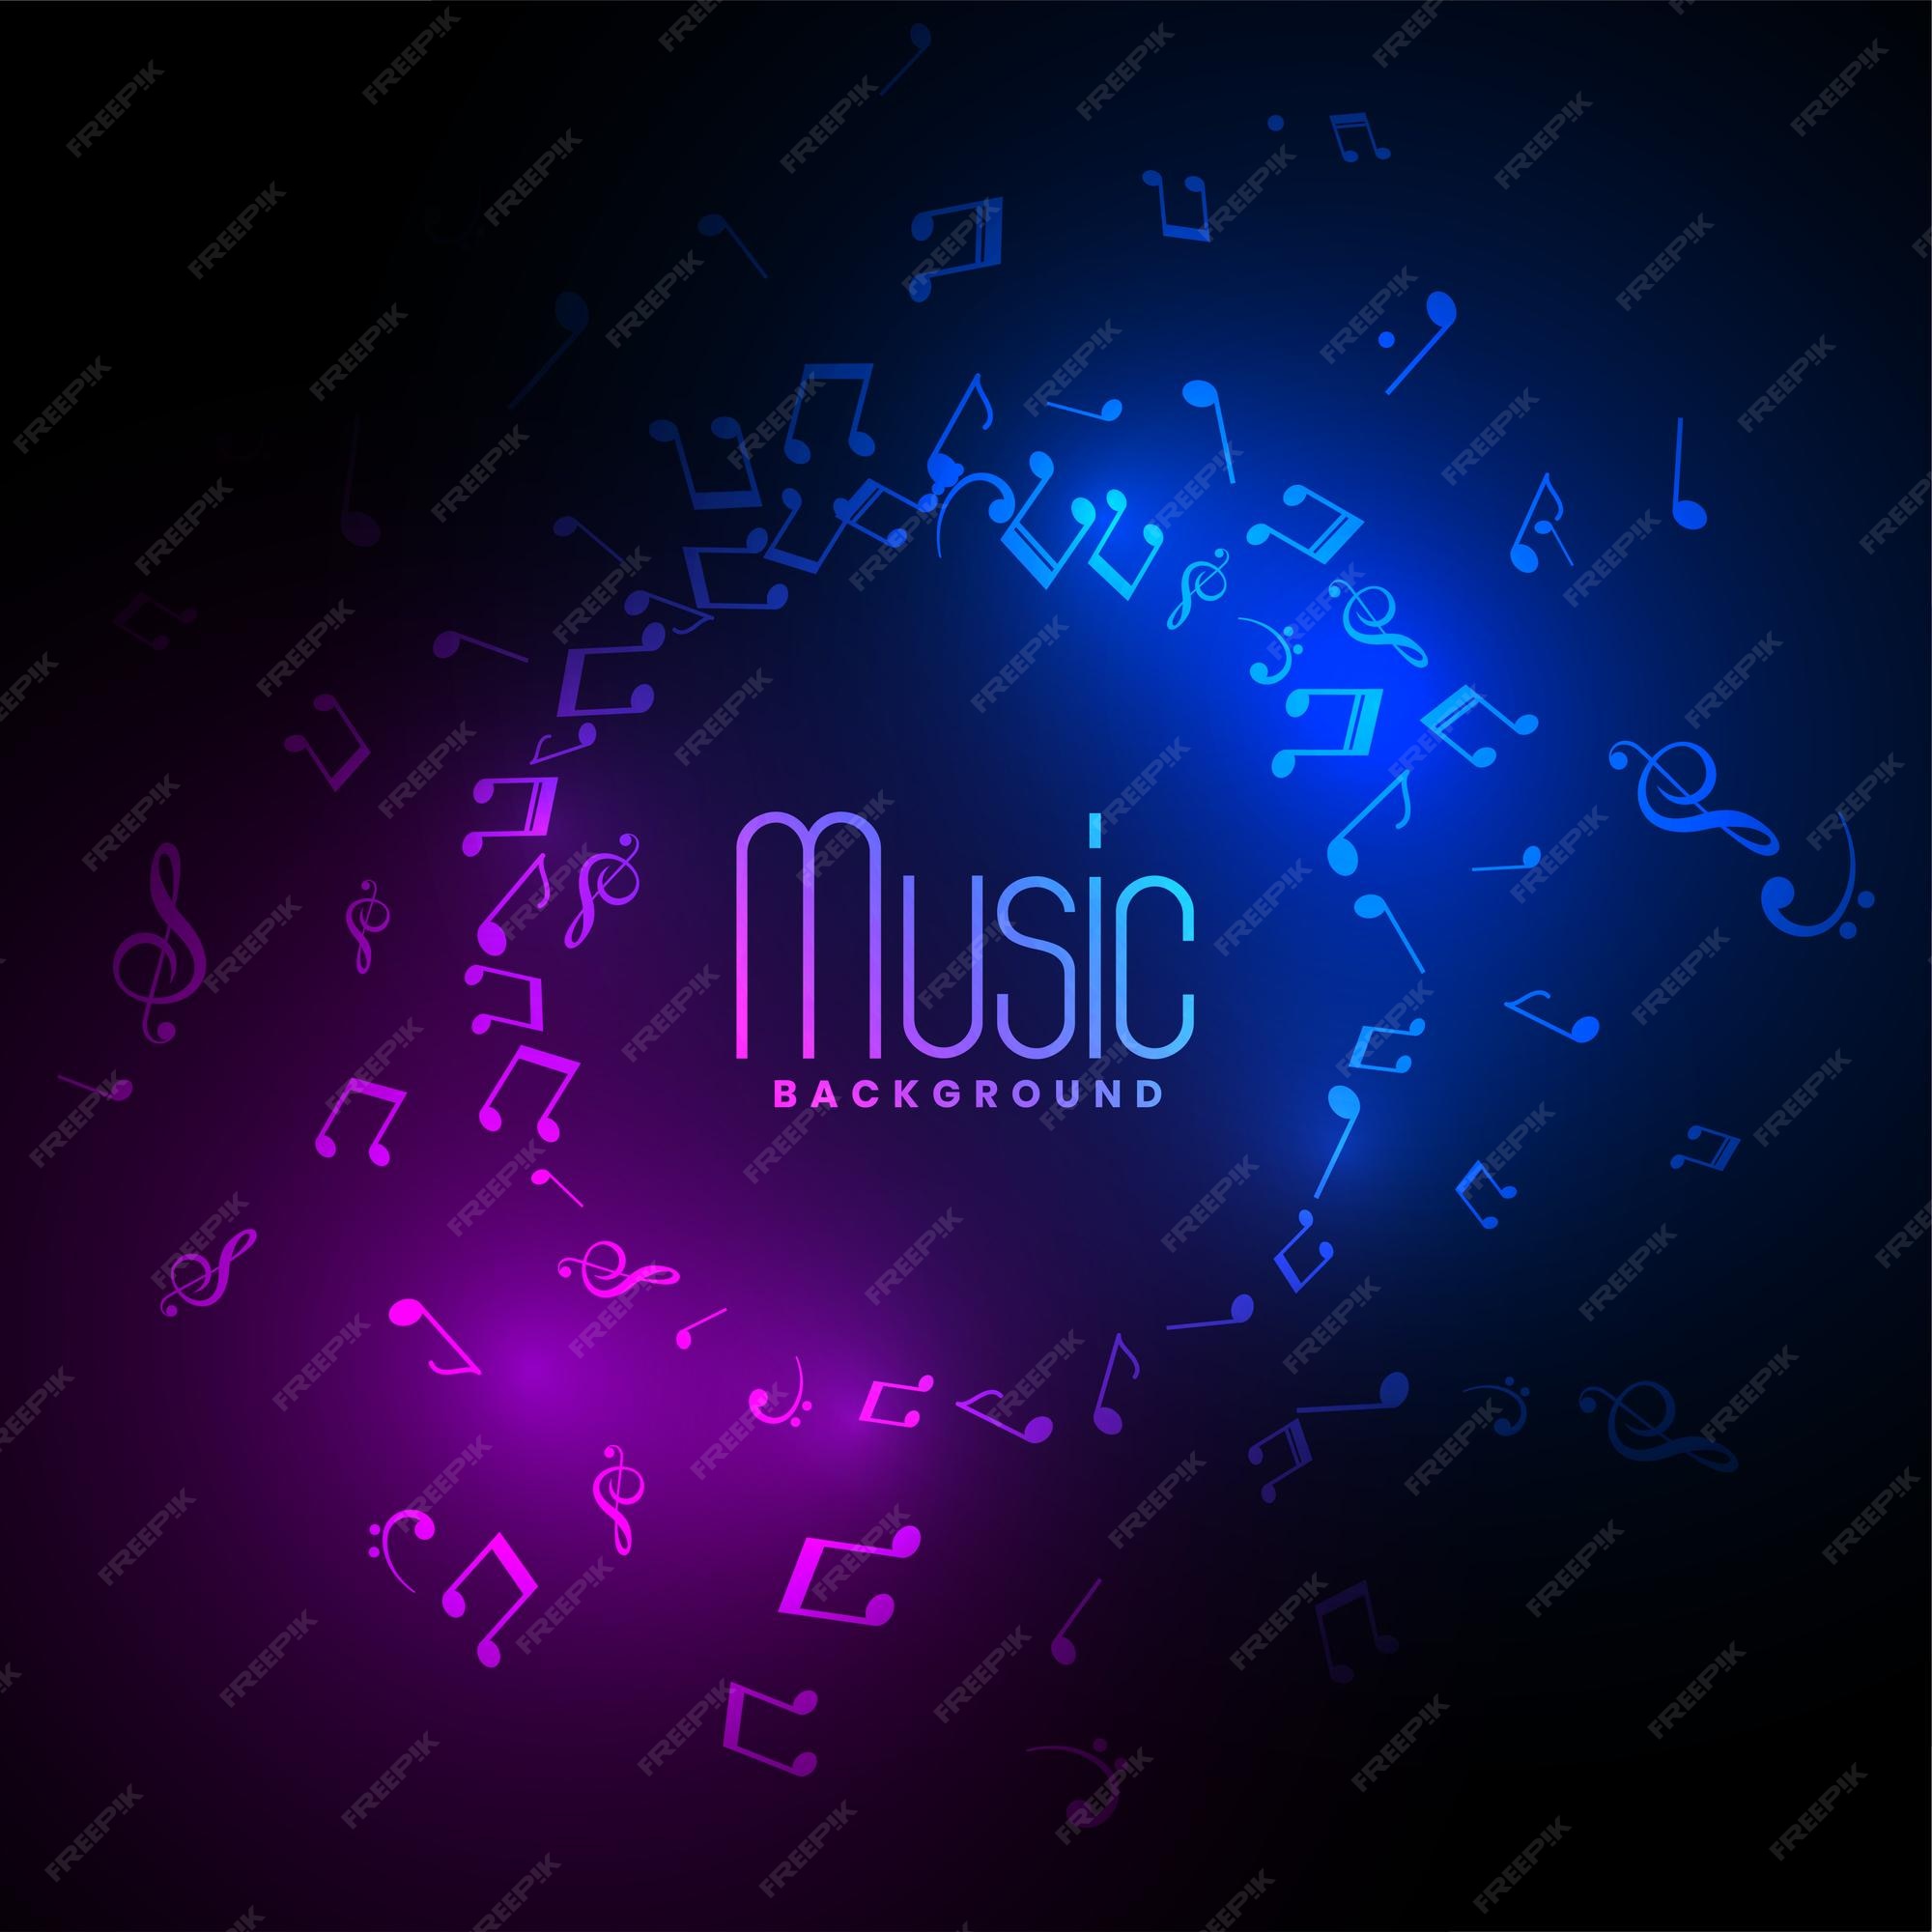 Neon Music Notes Images - Free Download on Freepik